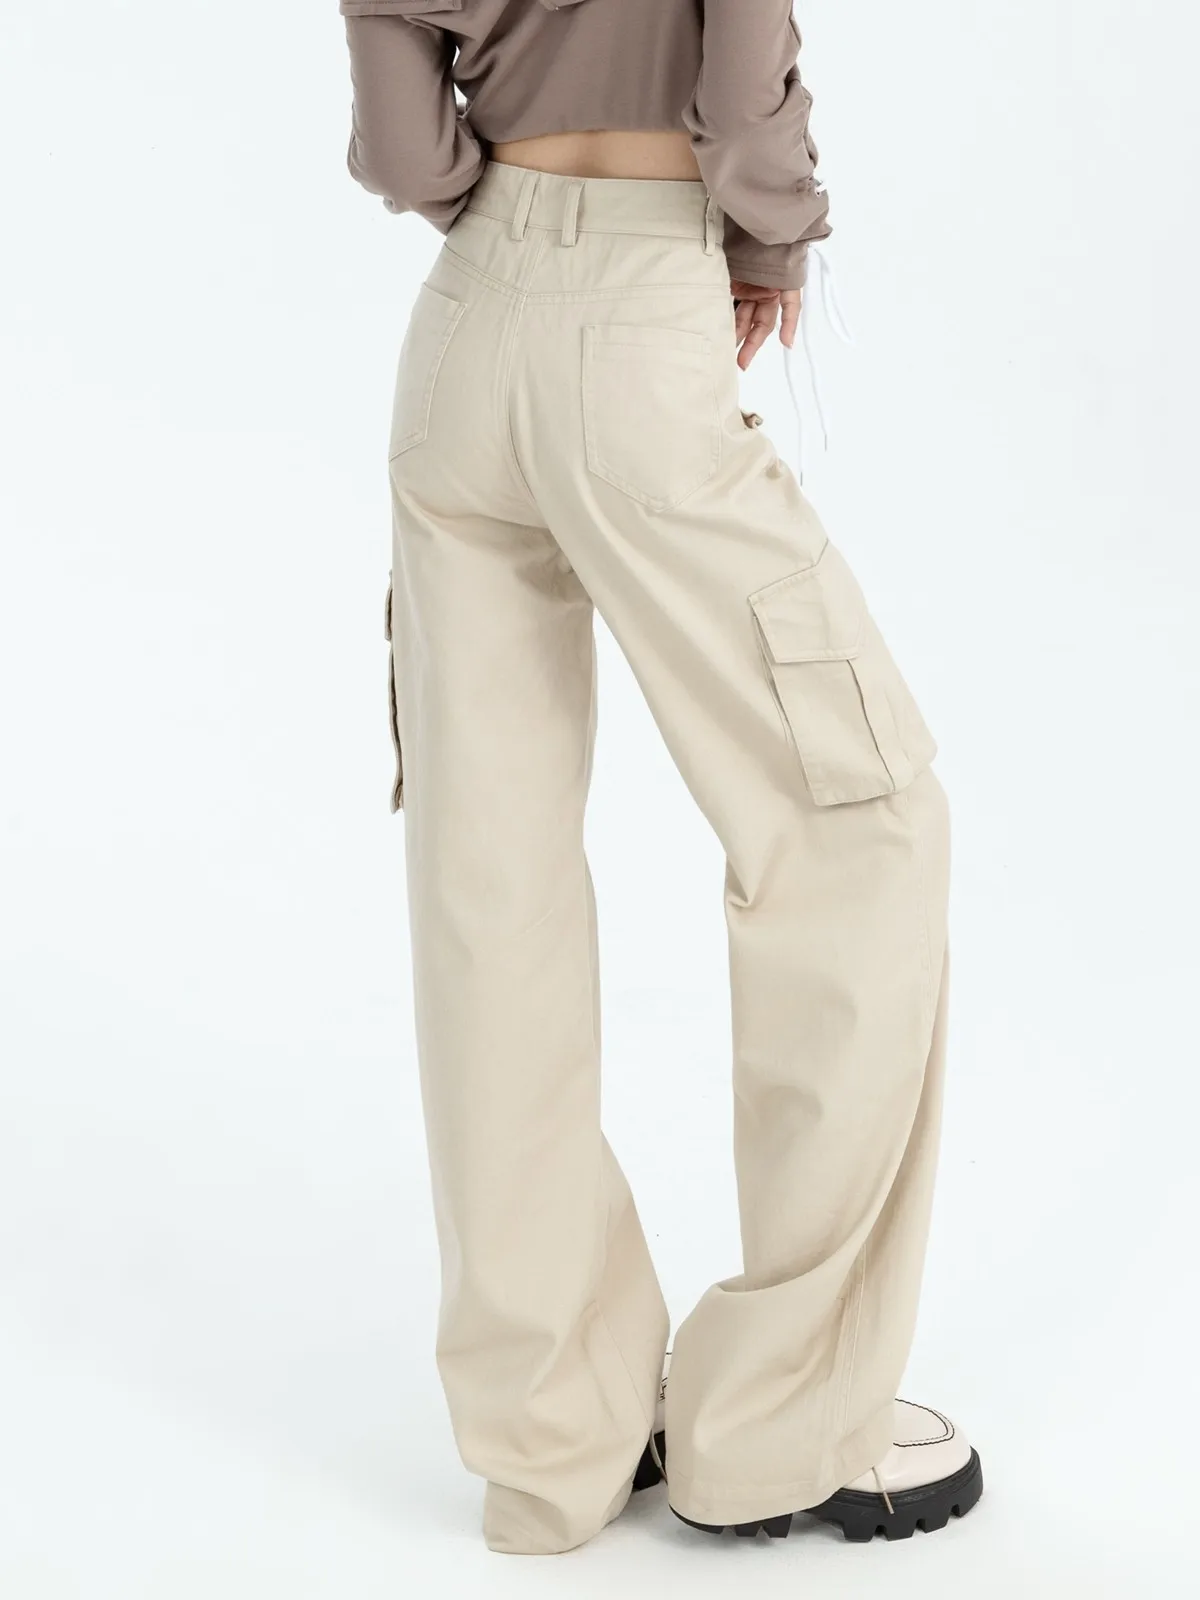 ZHISILAO-New-High-Waist-Cargo-Jeans-Women-Vintage-Solid-Pocket-Boyfriend-High-Street-Full-Length-Straight.jpg